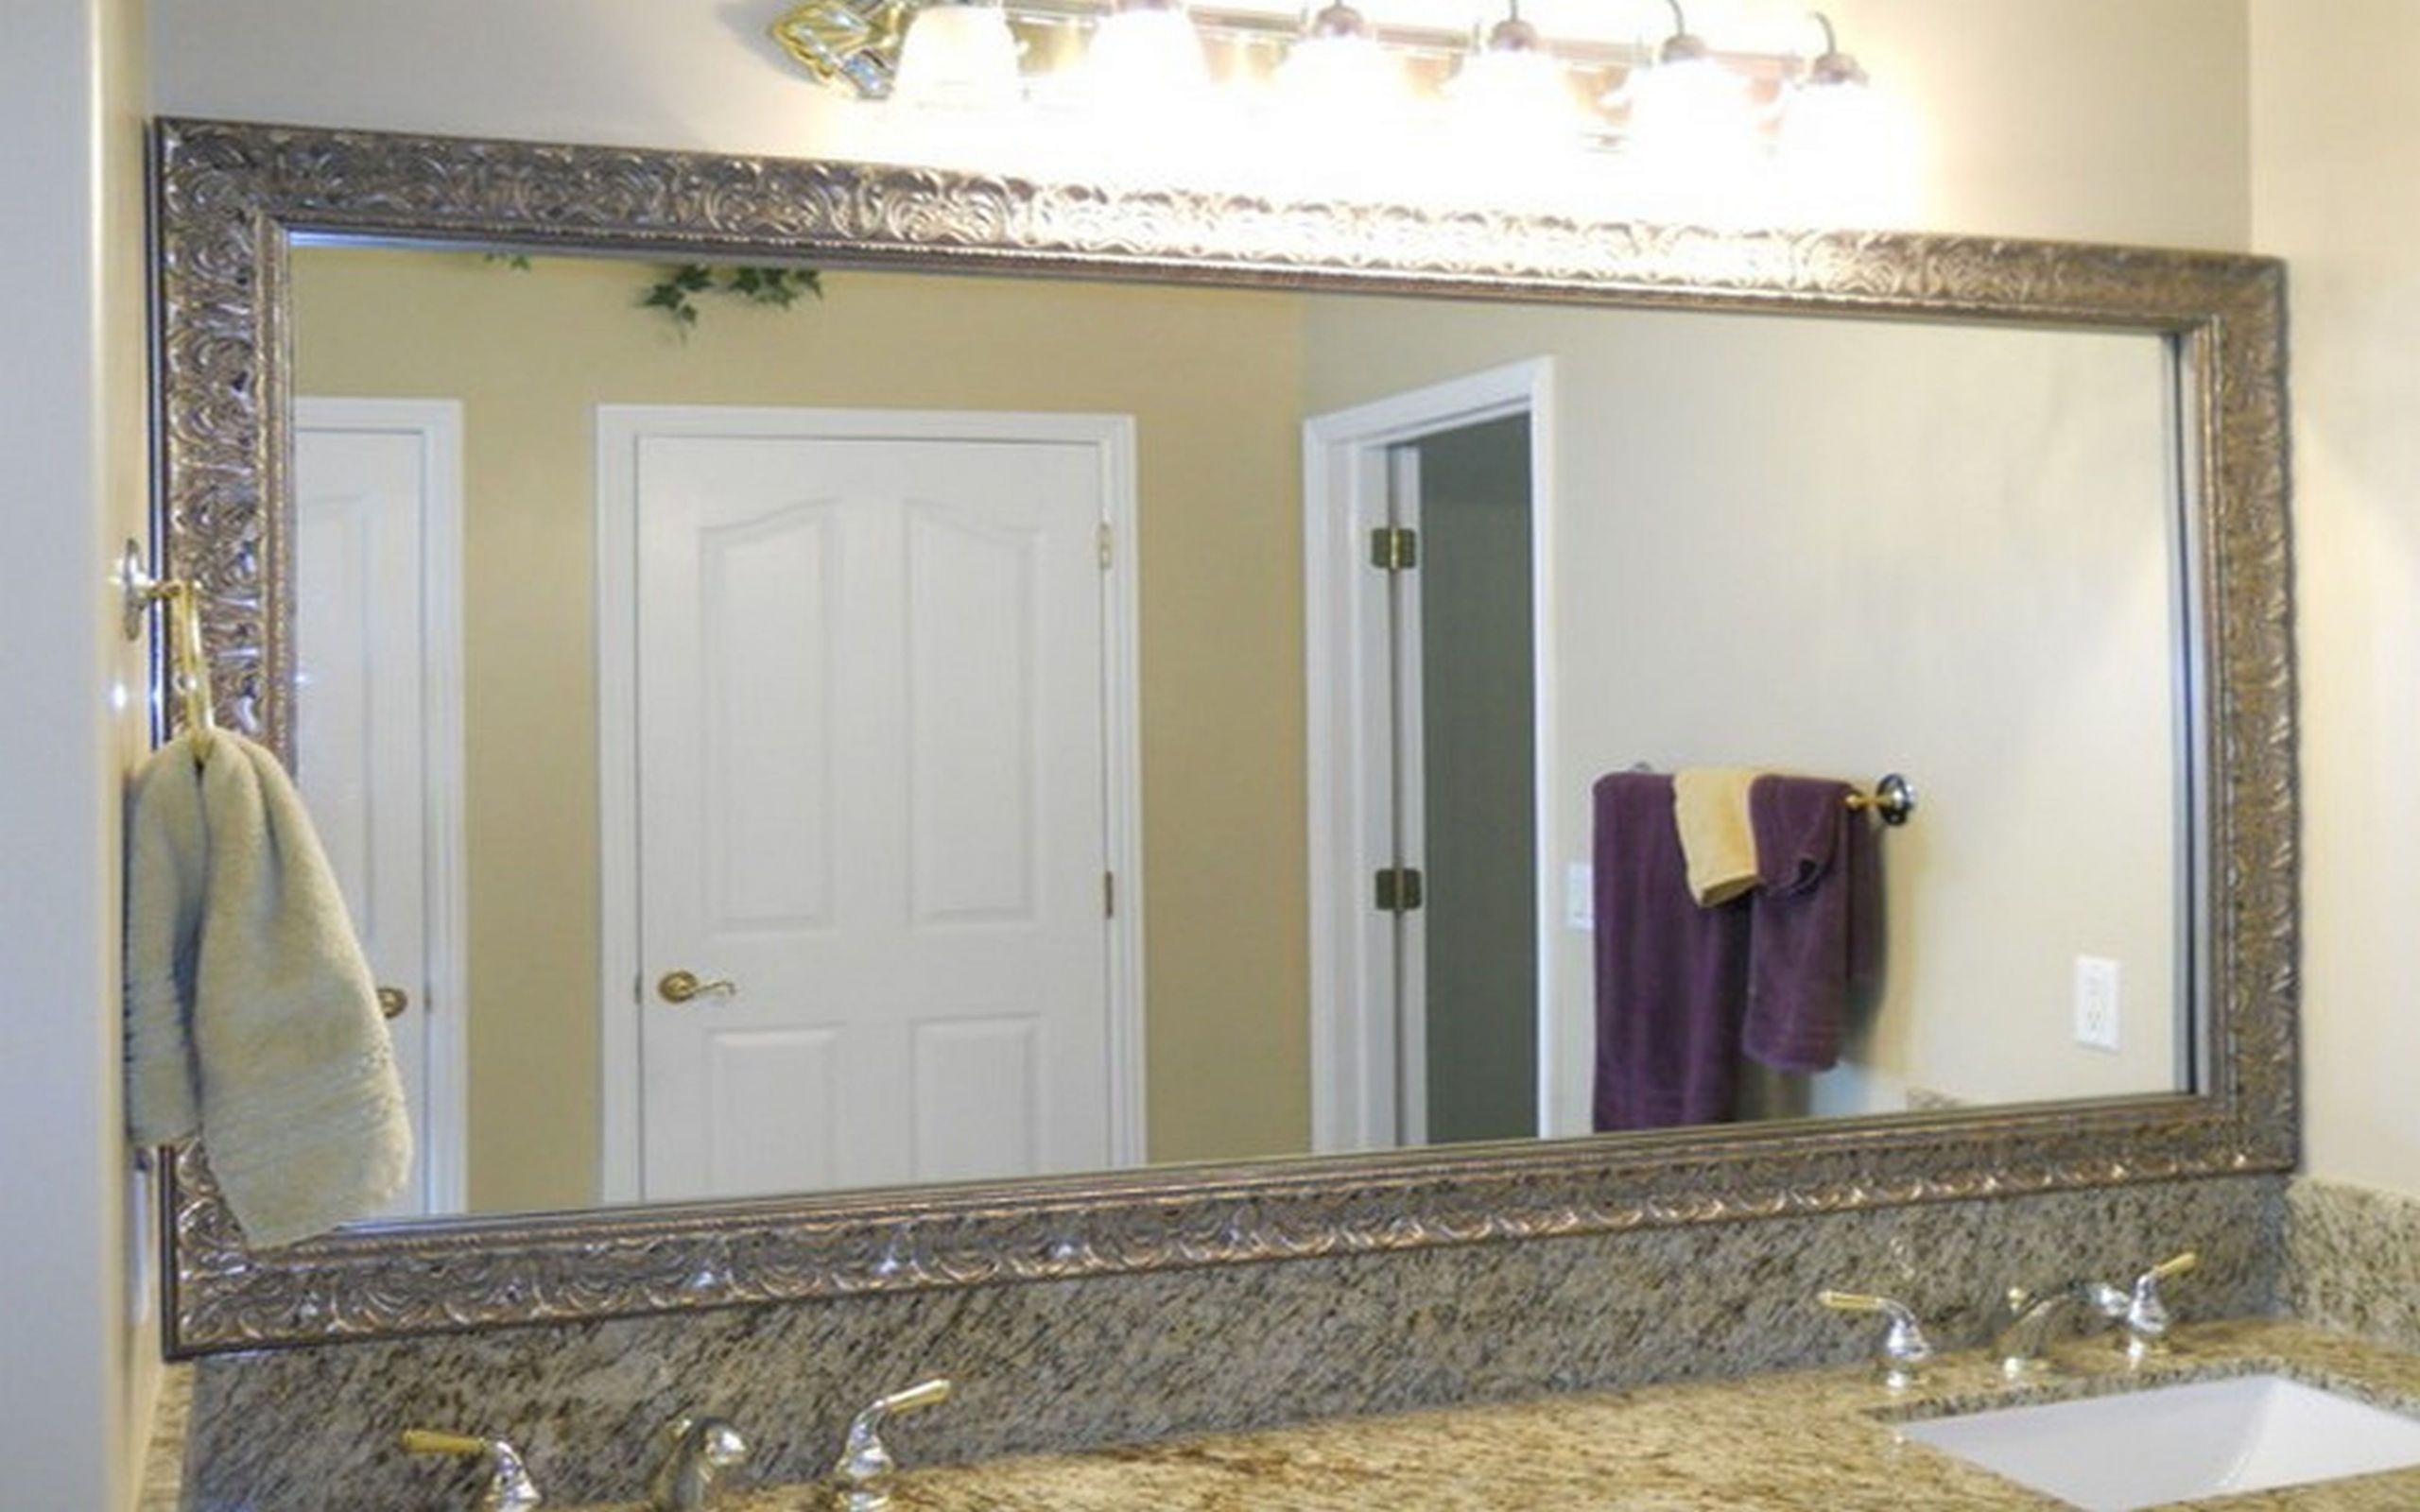 Framed Bathroom Mirror Ideas
 Bathroom Mirror Ideas in Varied Bathrooms worth to Try